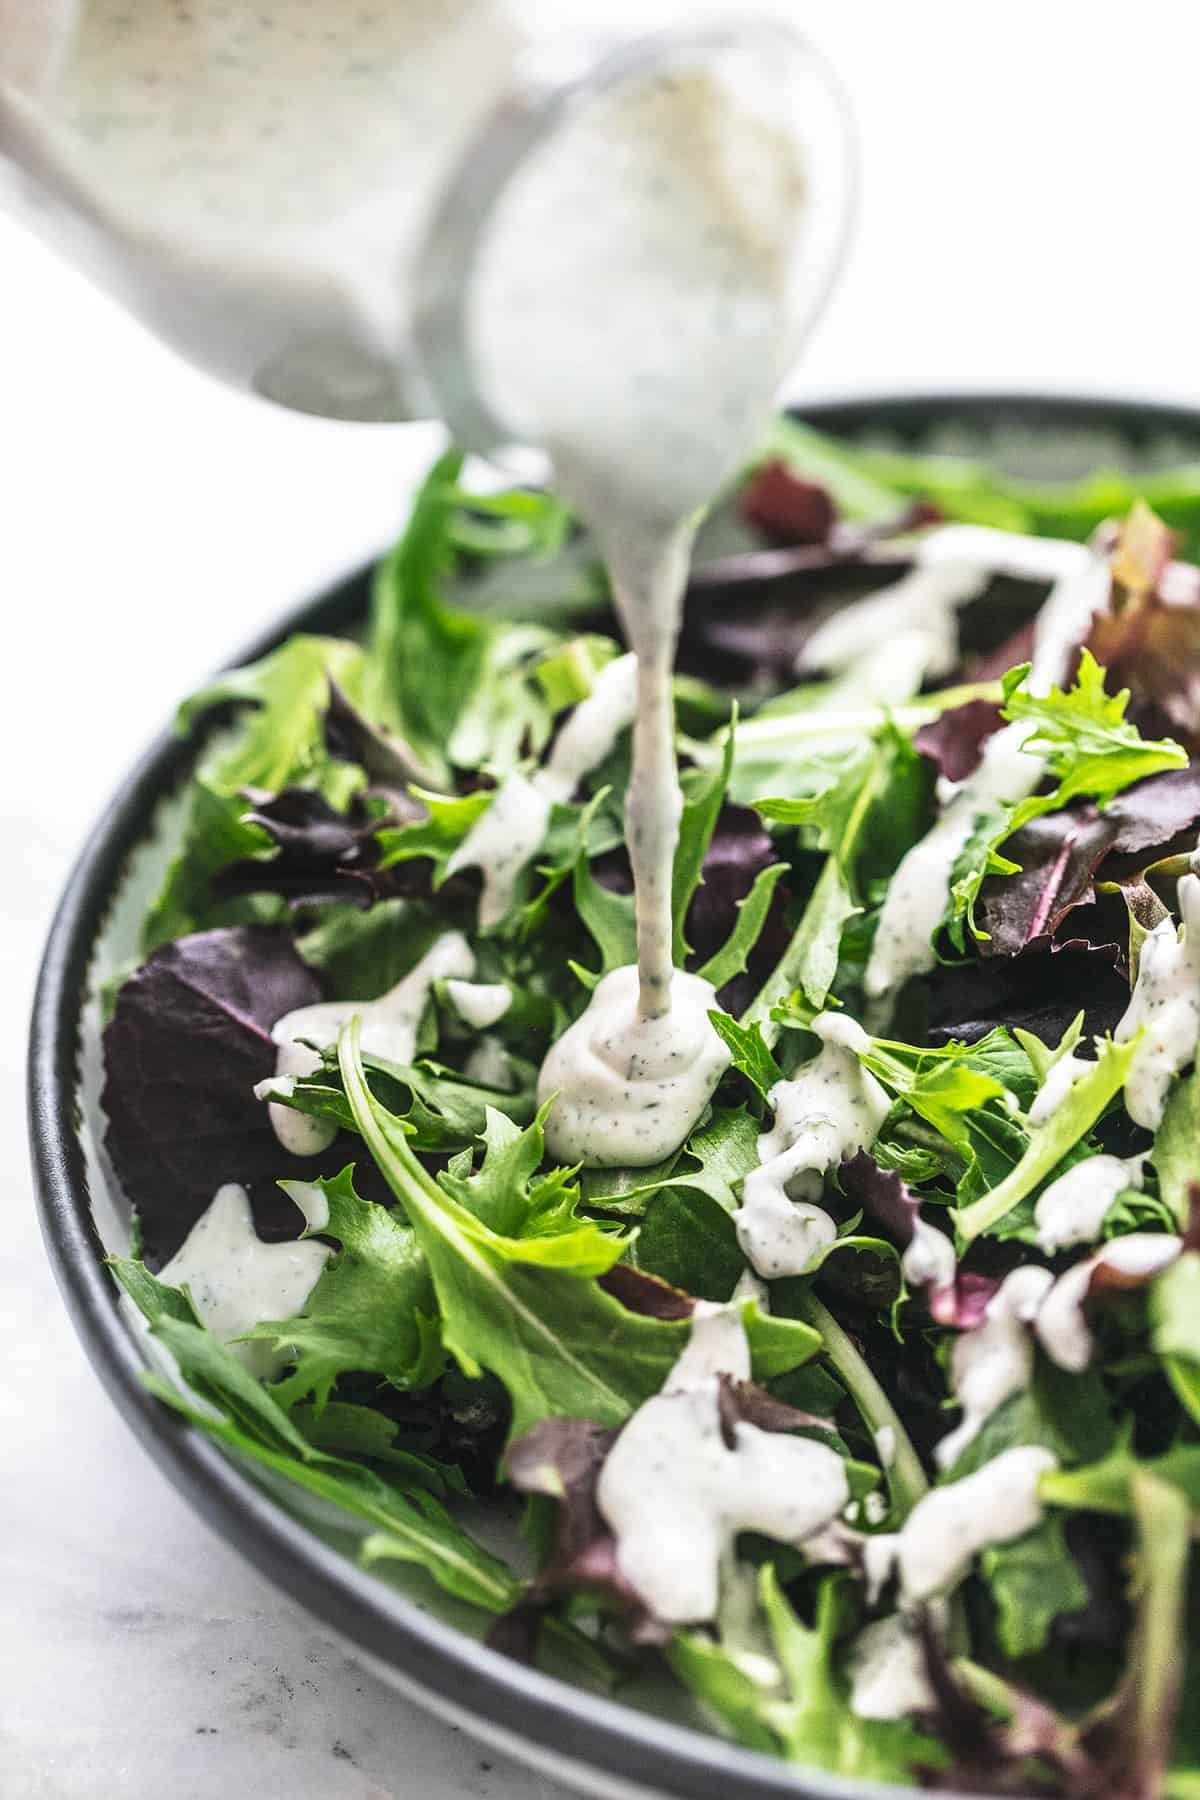 a jar of Greek yogurt ranch dressing or dip being poured onto salad in a bowl.